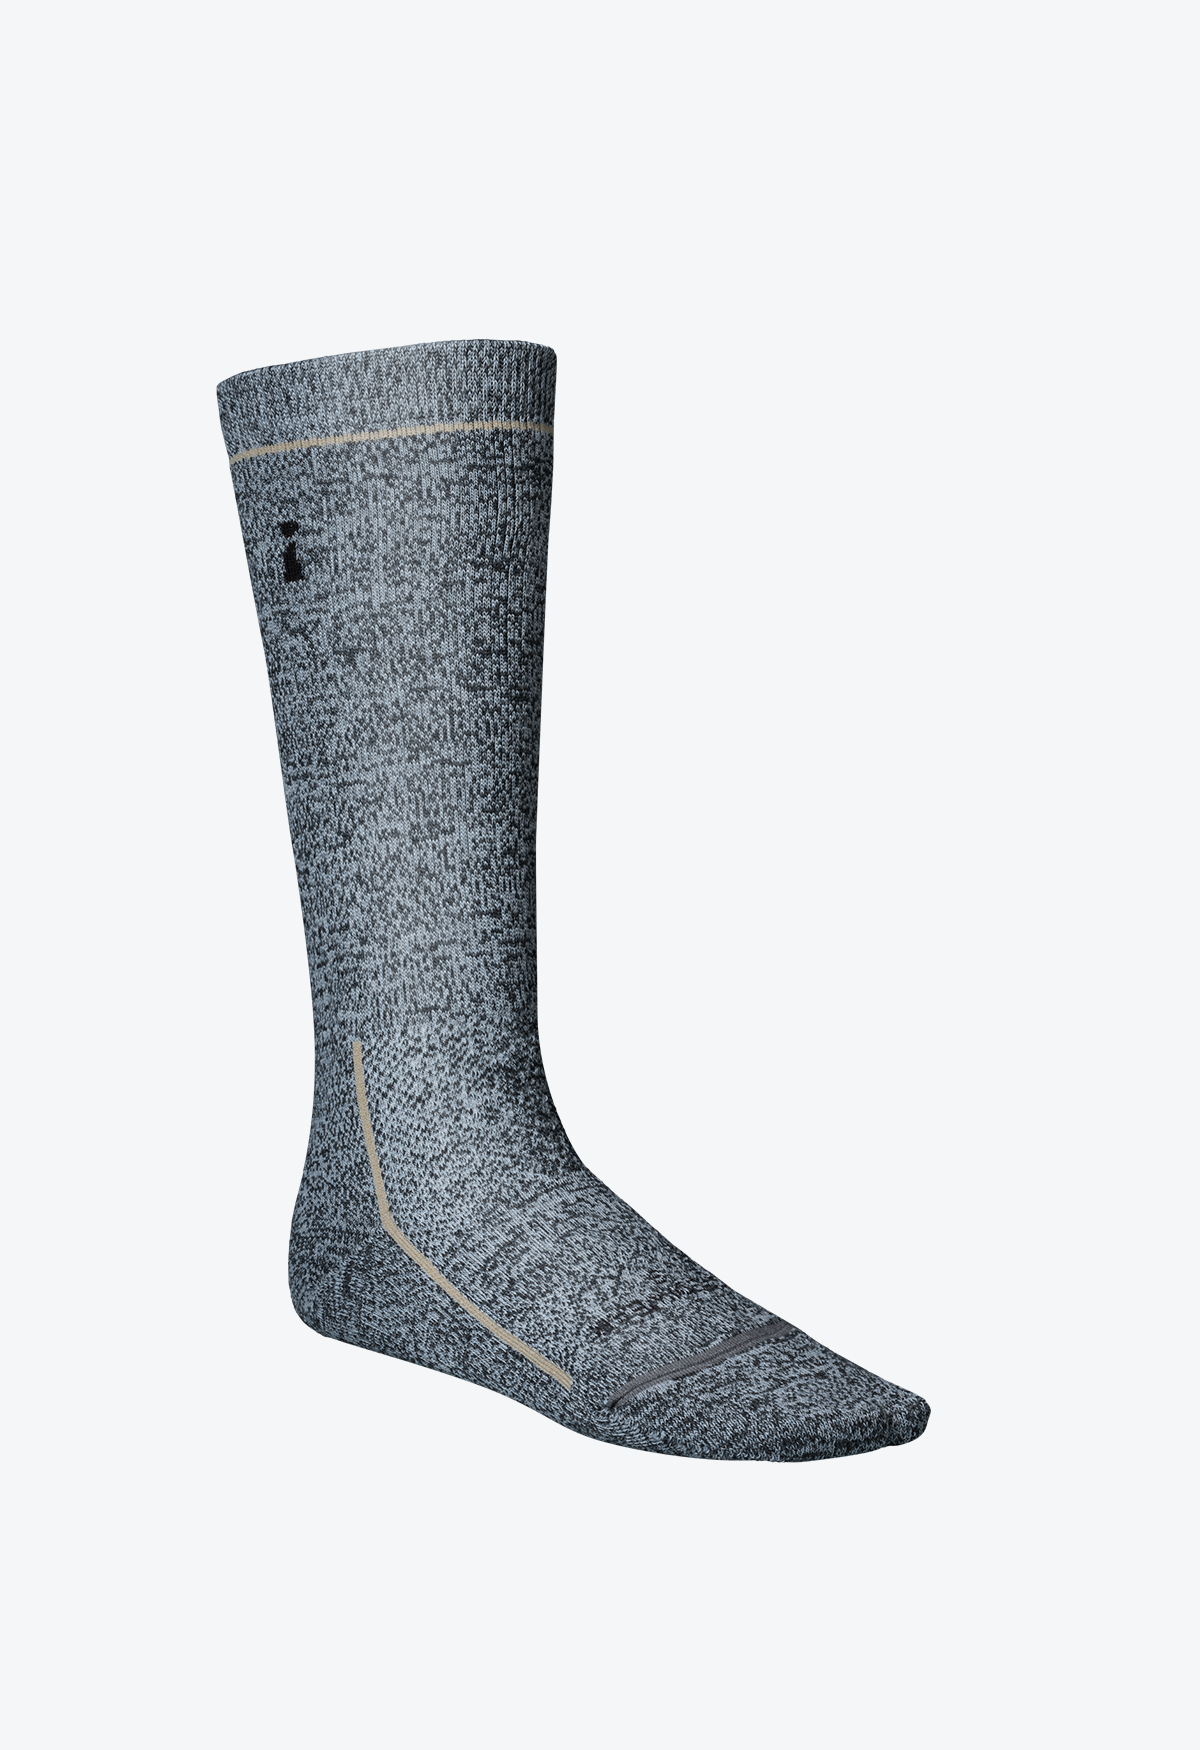 Incredisocks bamboo charcoal premium hiking sock